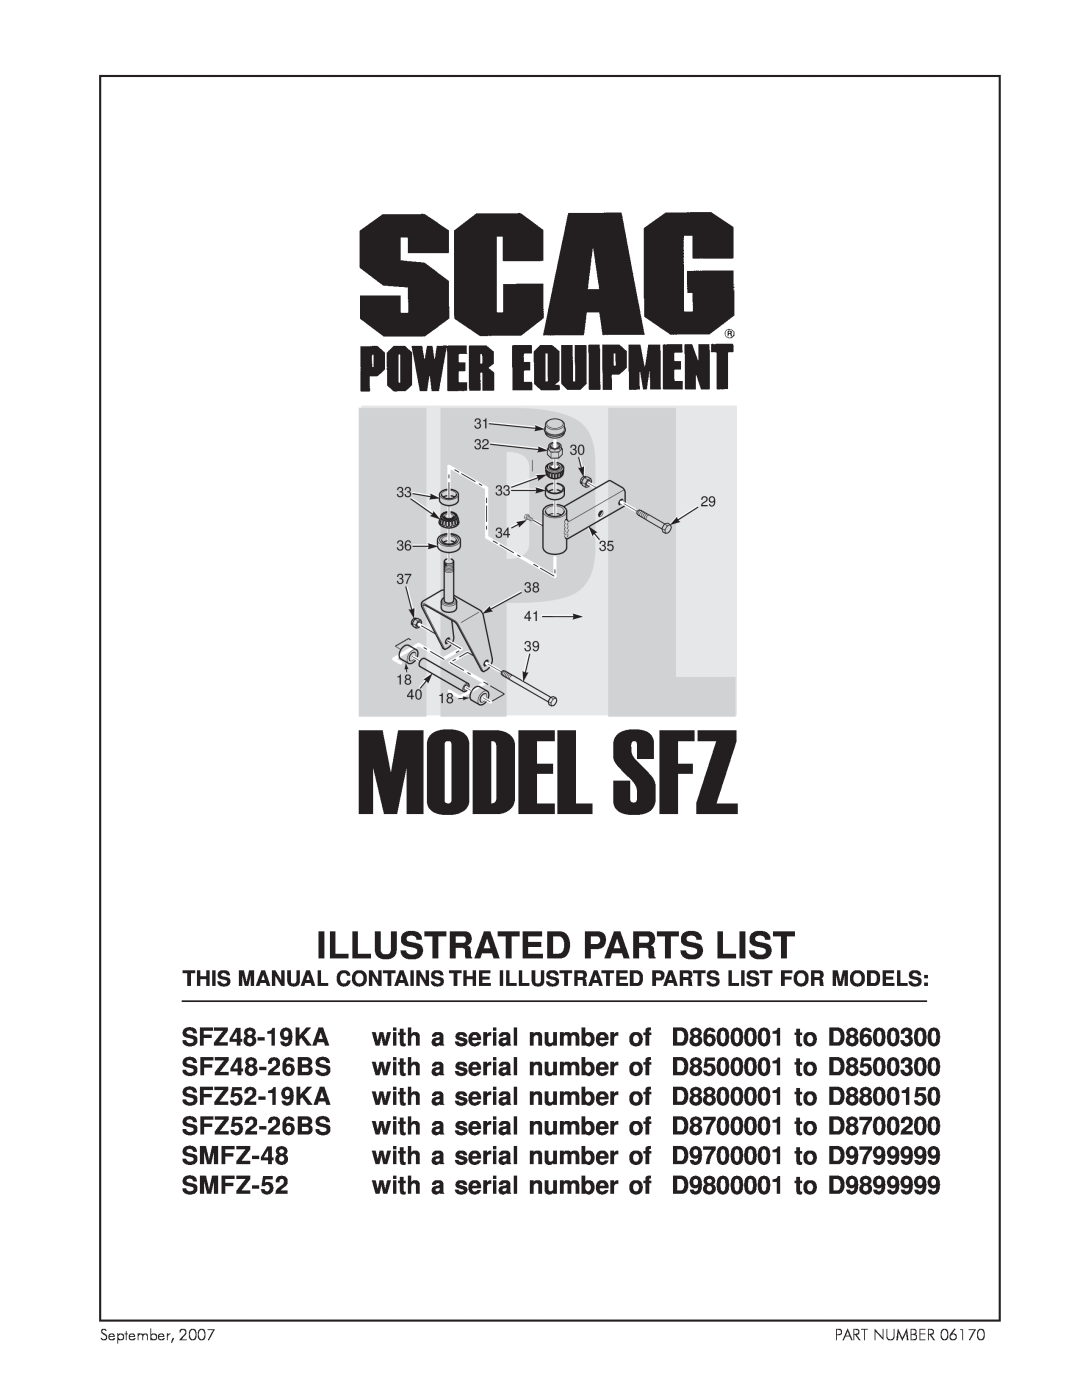 Scag Power Equipment sfz48-26bs, SFZ52-26BS, SMFZ-52, SFZ52-19KA, SMFZ-48 manual I Pl, Model Sfz, Illustrated Parts List 